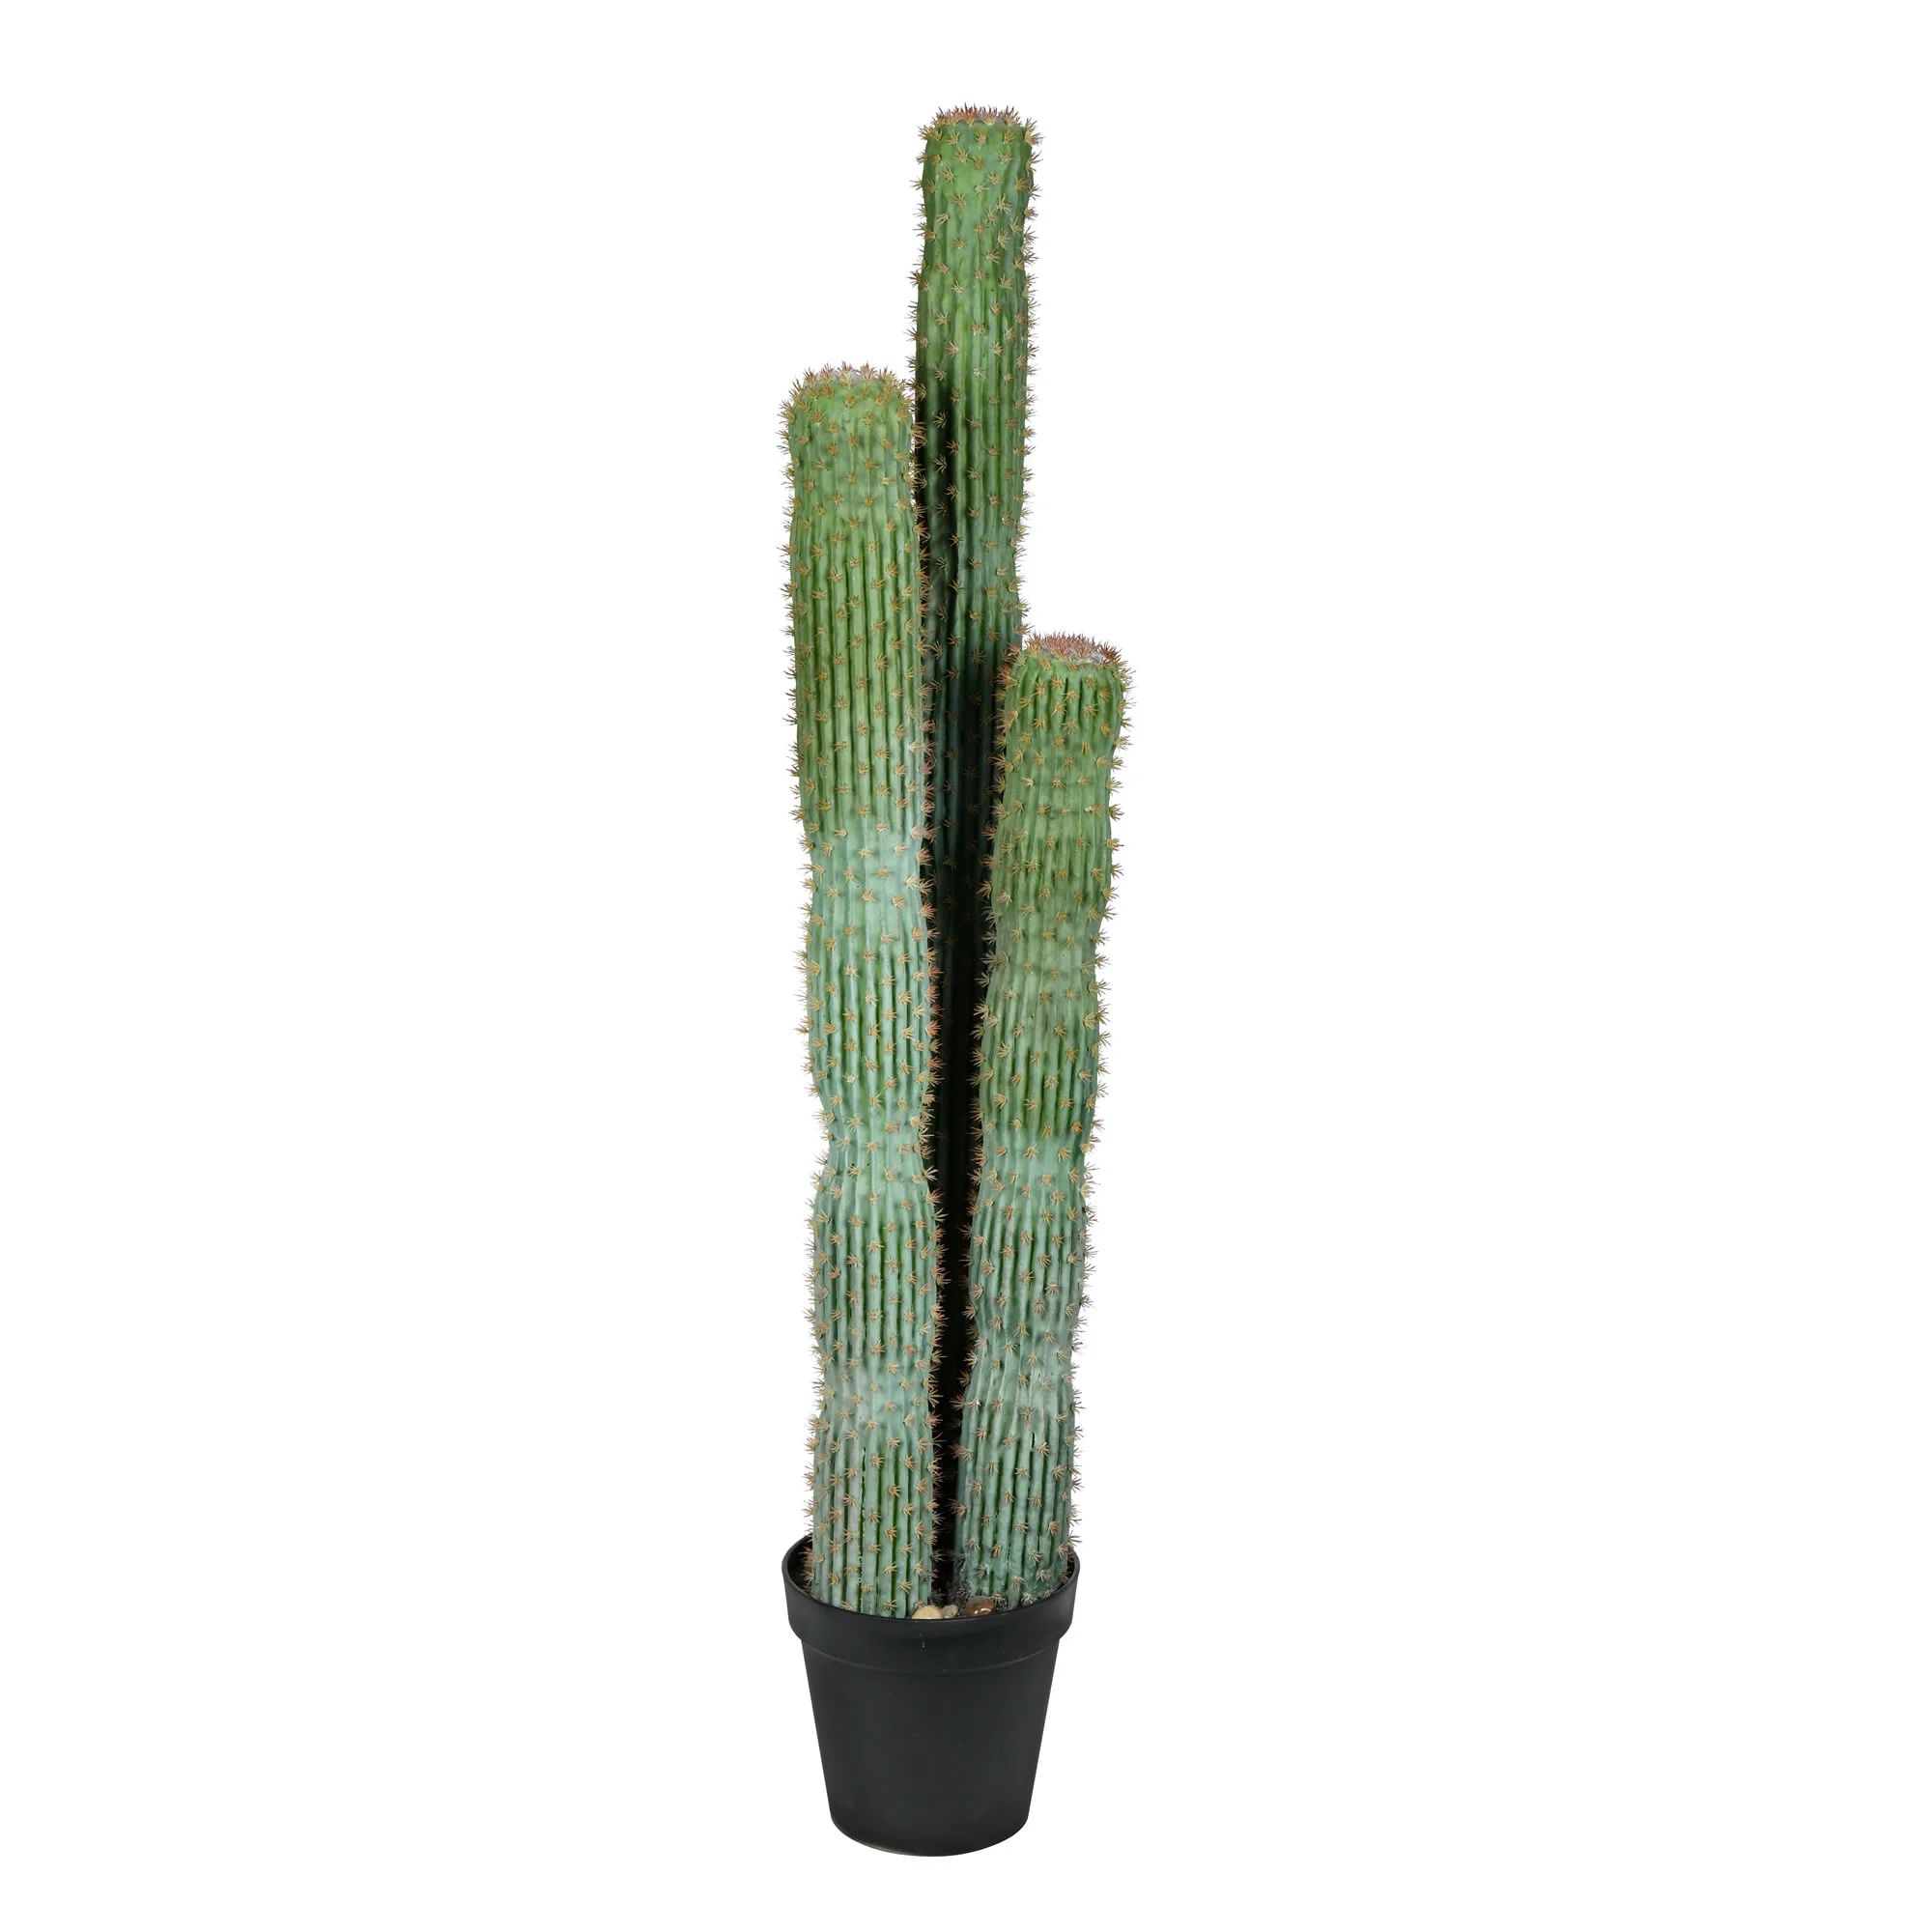 Artificial Cactus Plant in Pot | Wayfair Professional